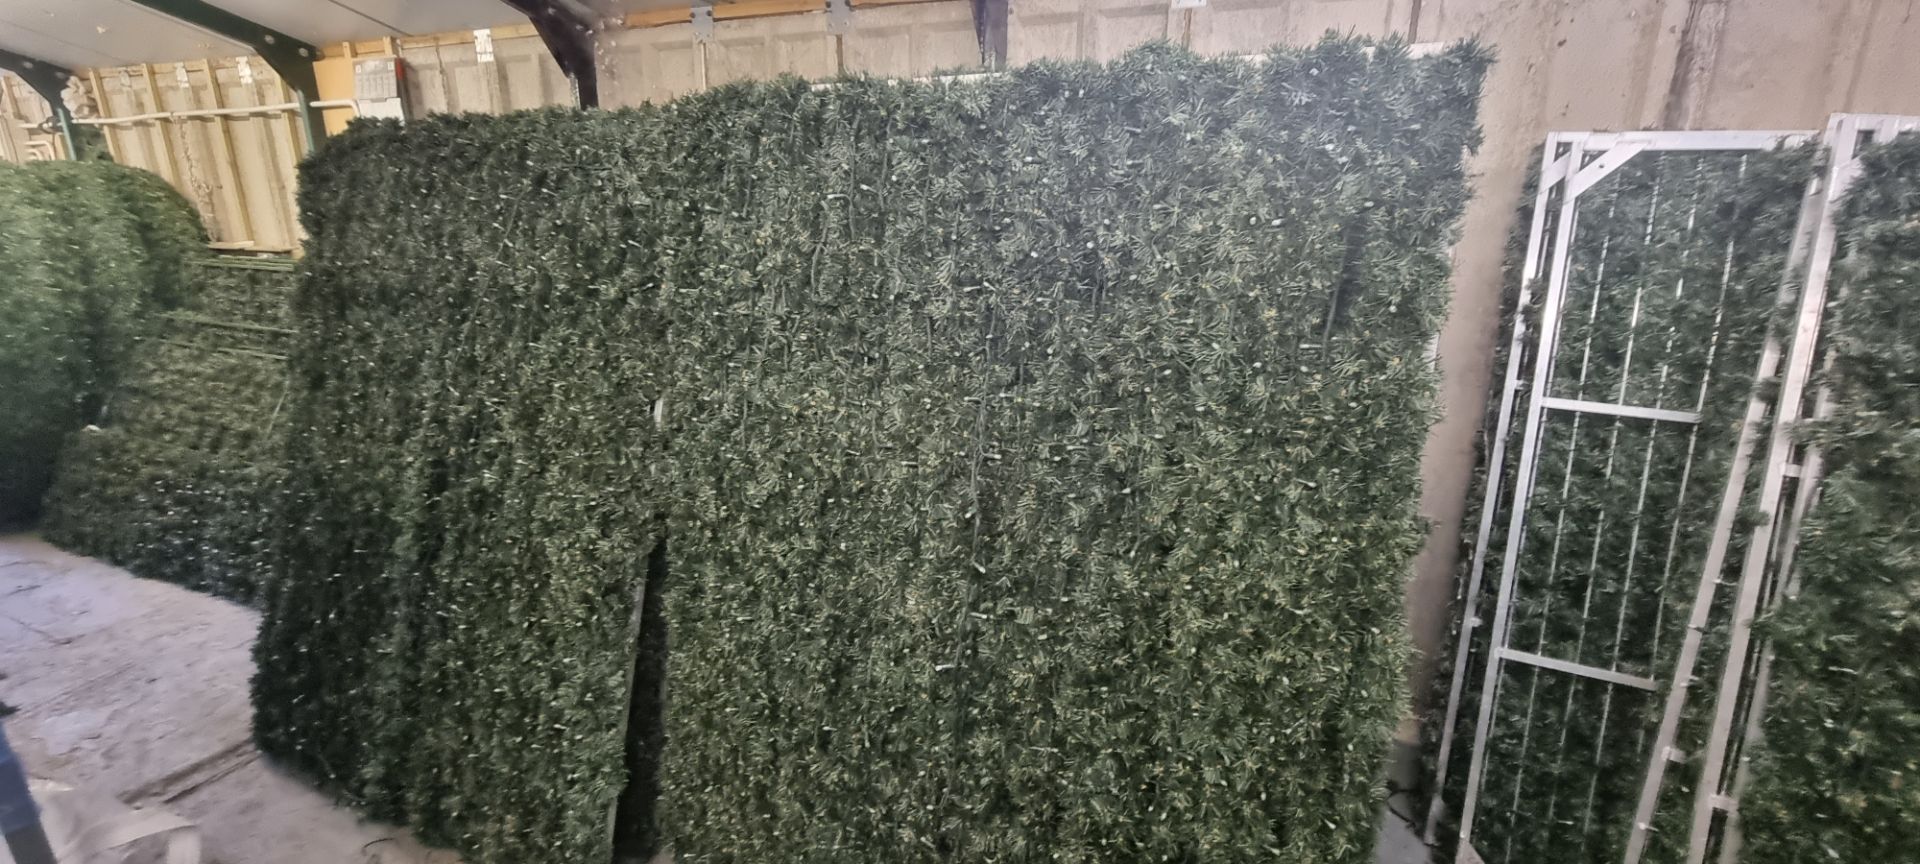 24 x Seasonal Aluminium Panels with Green Garland - Image 2 of 3